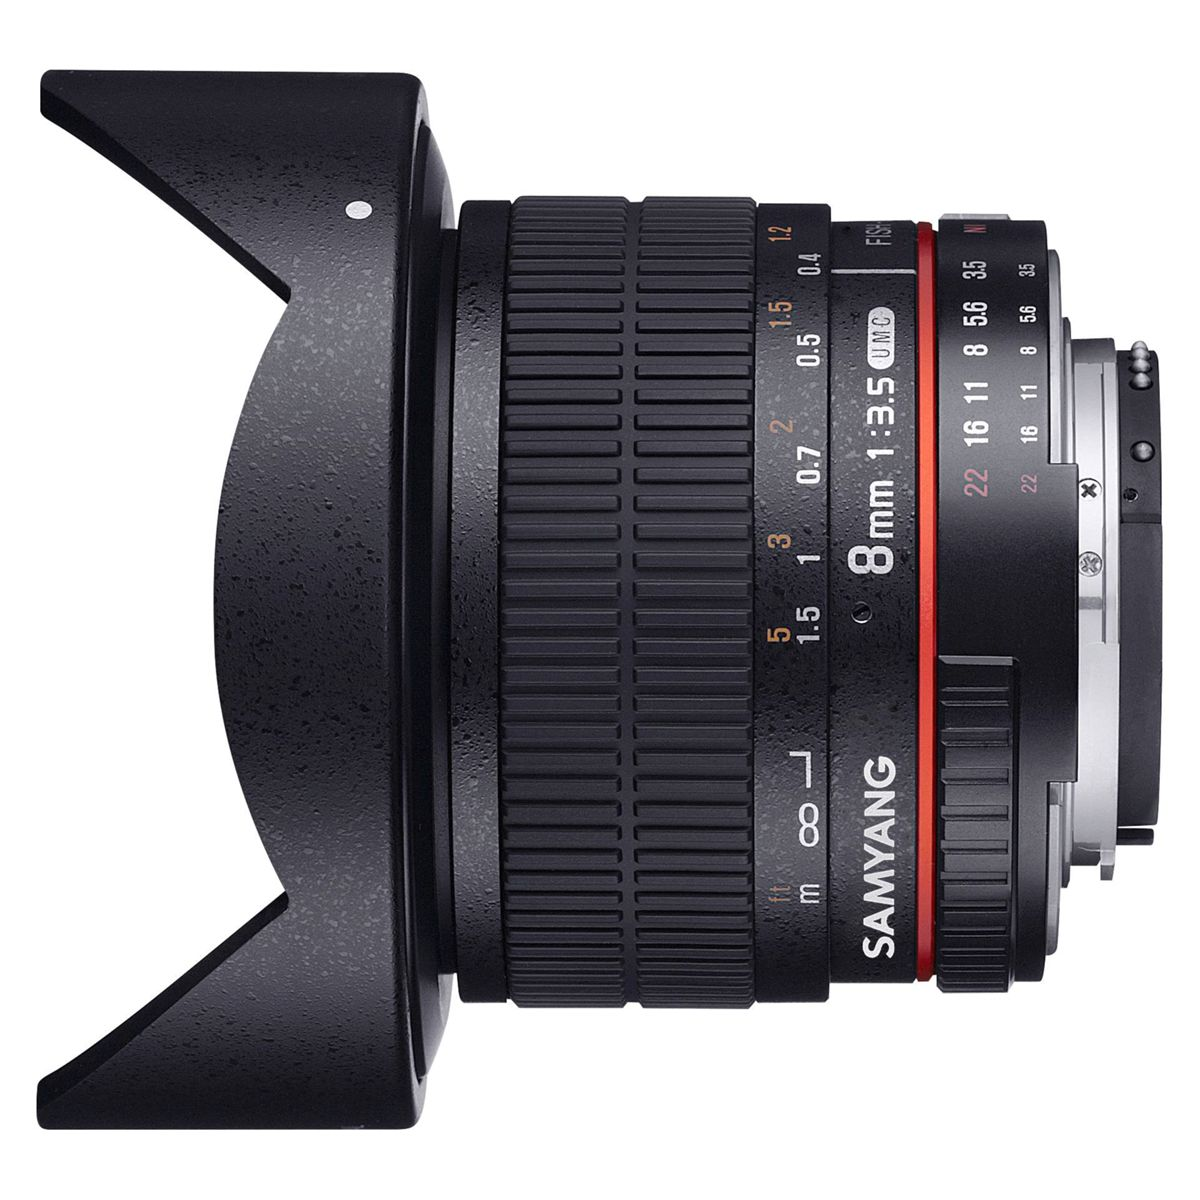 SAMYANG MF 3,5/8 8 mm EF-Mount, EF II Fish-Eye 3:30 Canon Schwarz) Canon APS-C für (Objektiv